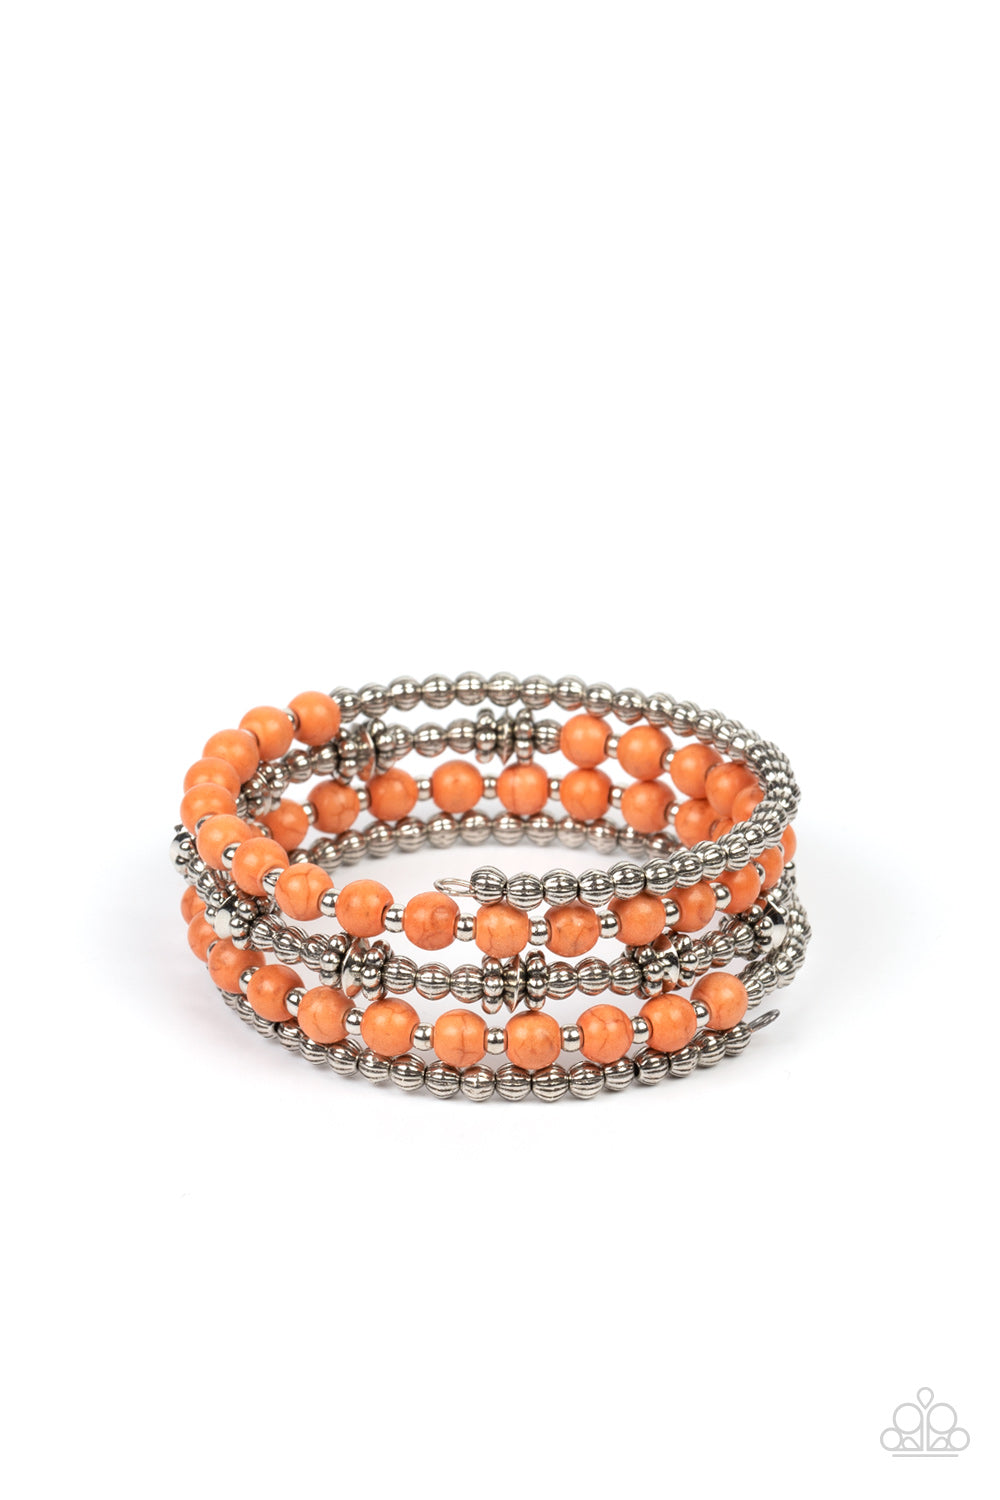 Road Trip Remix Paparazzi Accessories Bracelet Orange